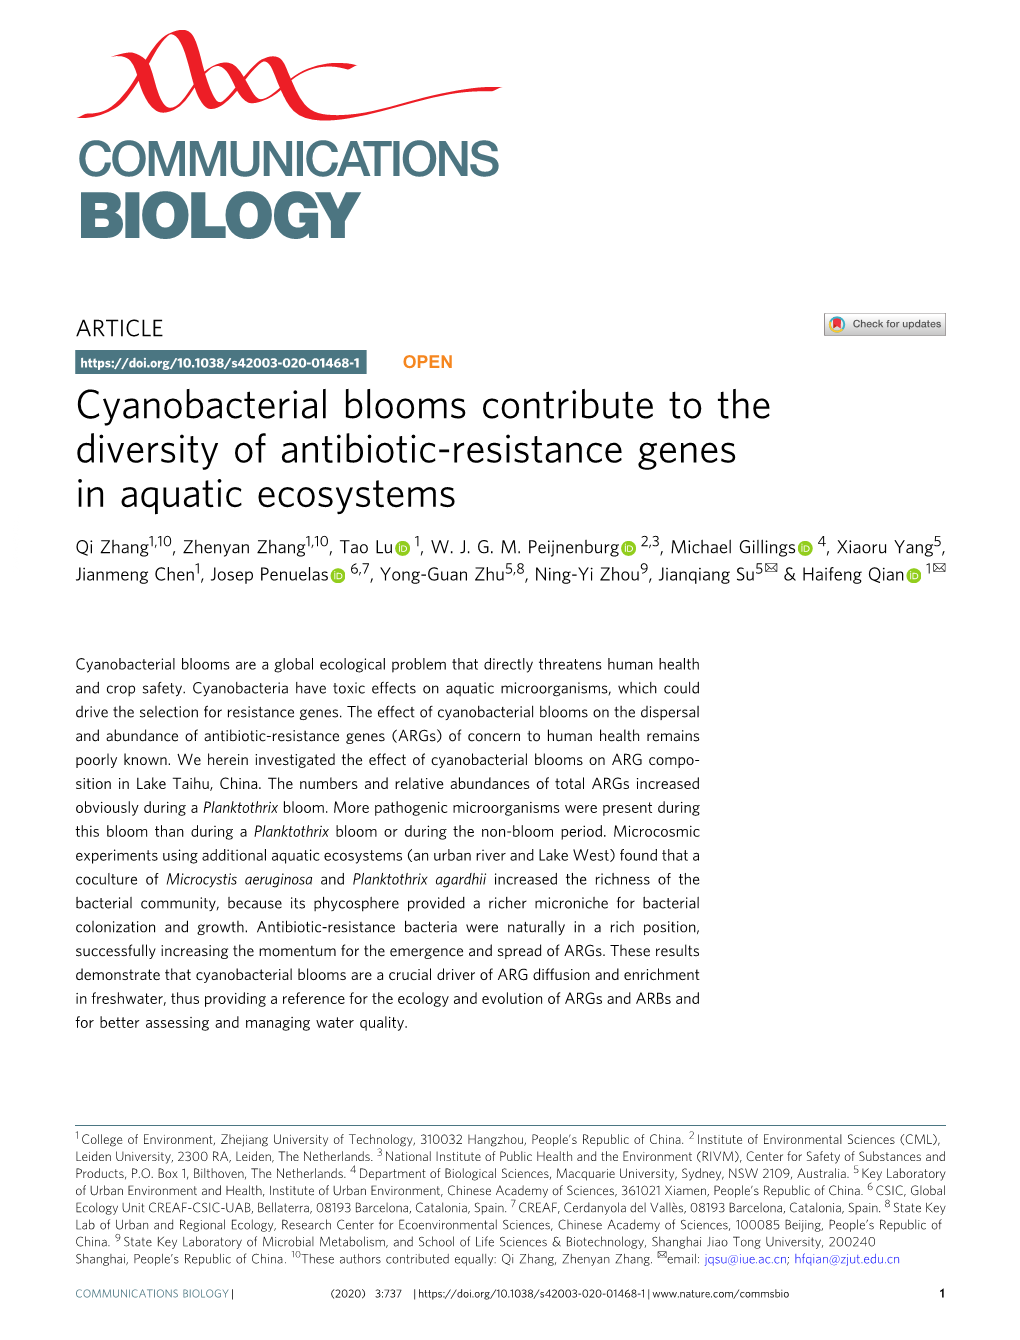 Cyanobacterial Blooms Contribute to the Diversity of Antibiotic-Resistance Genes in Aquatic Ecosystems